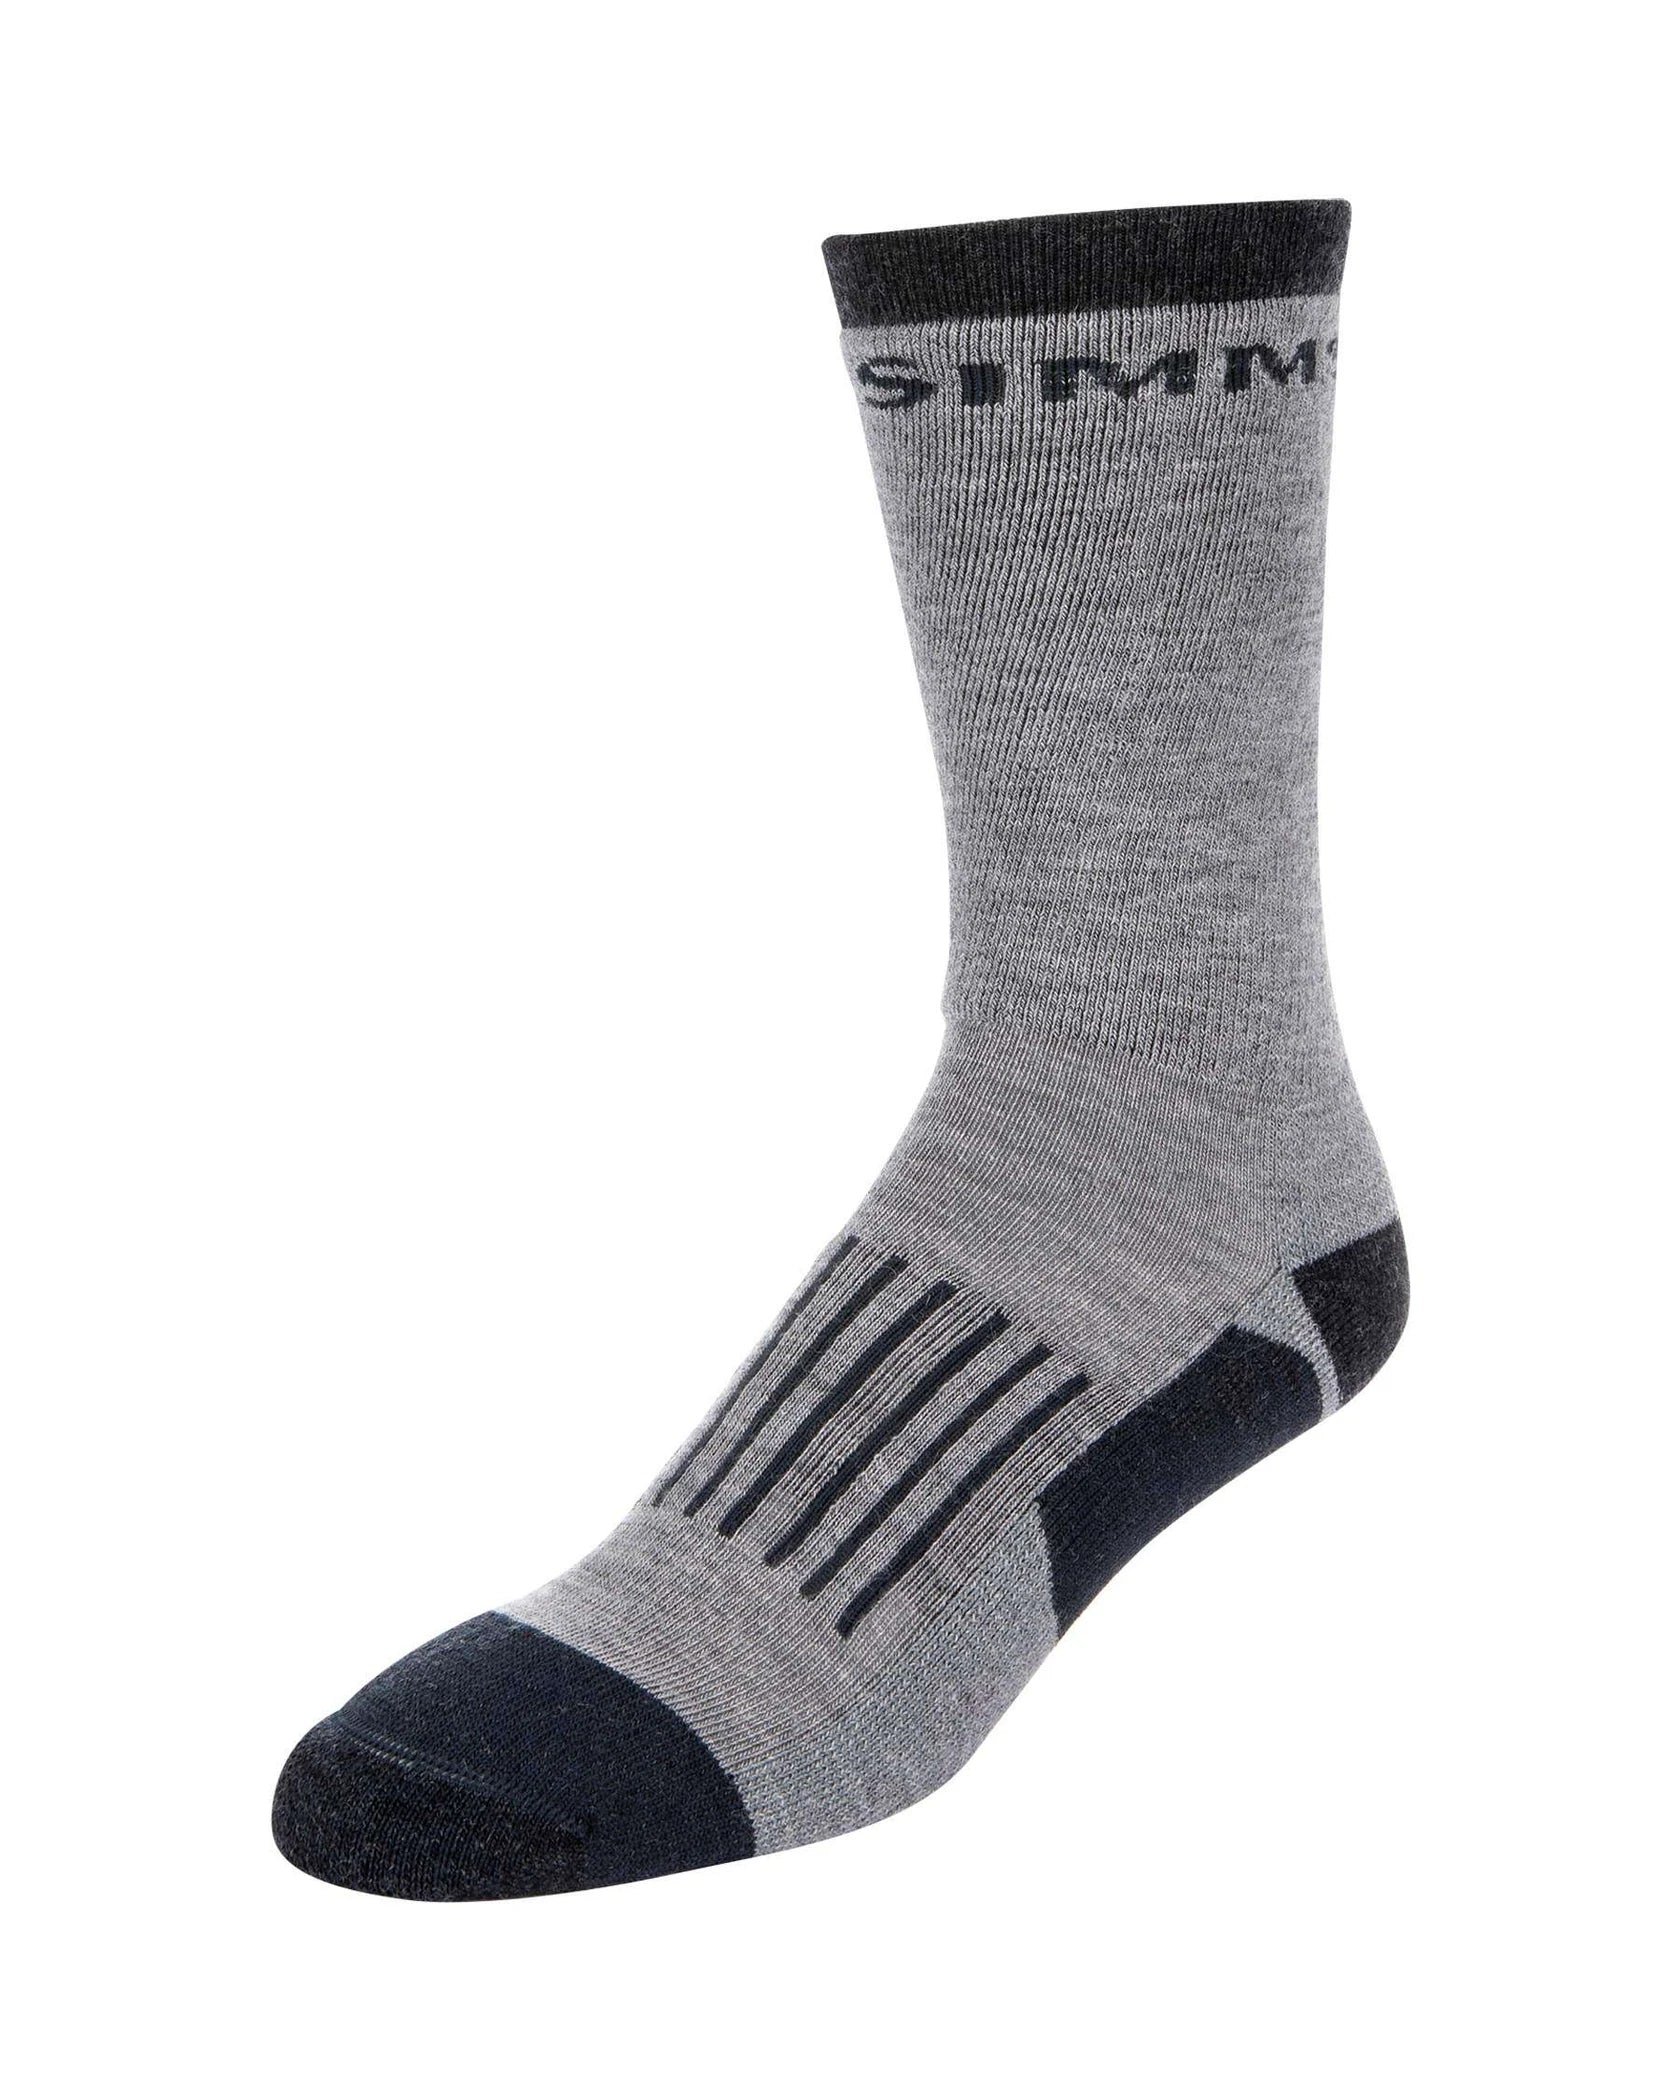 Socks & Footwear – Sportinglife Turangi